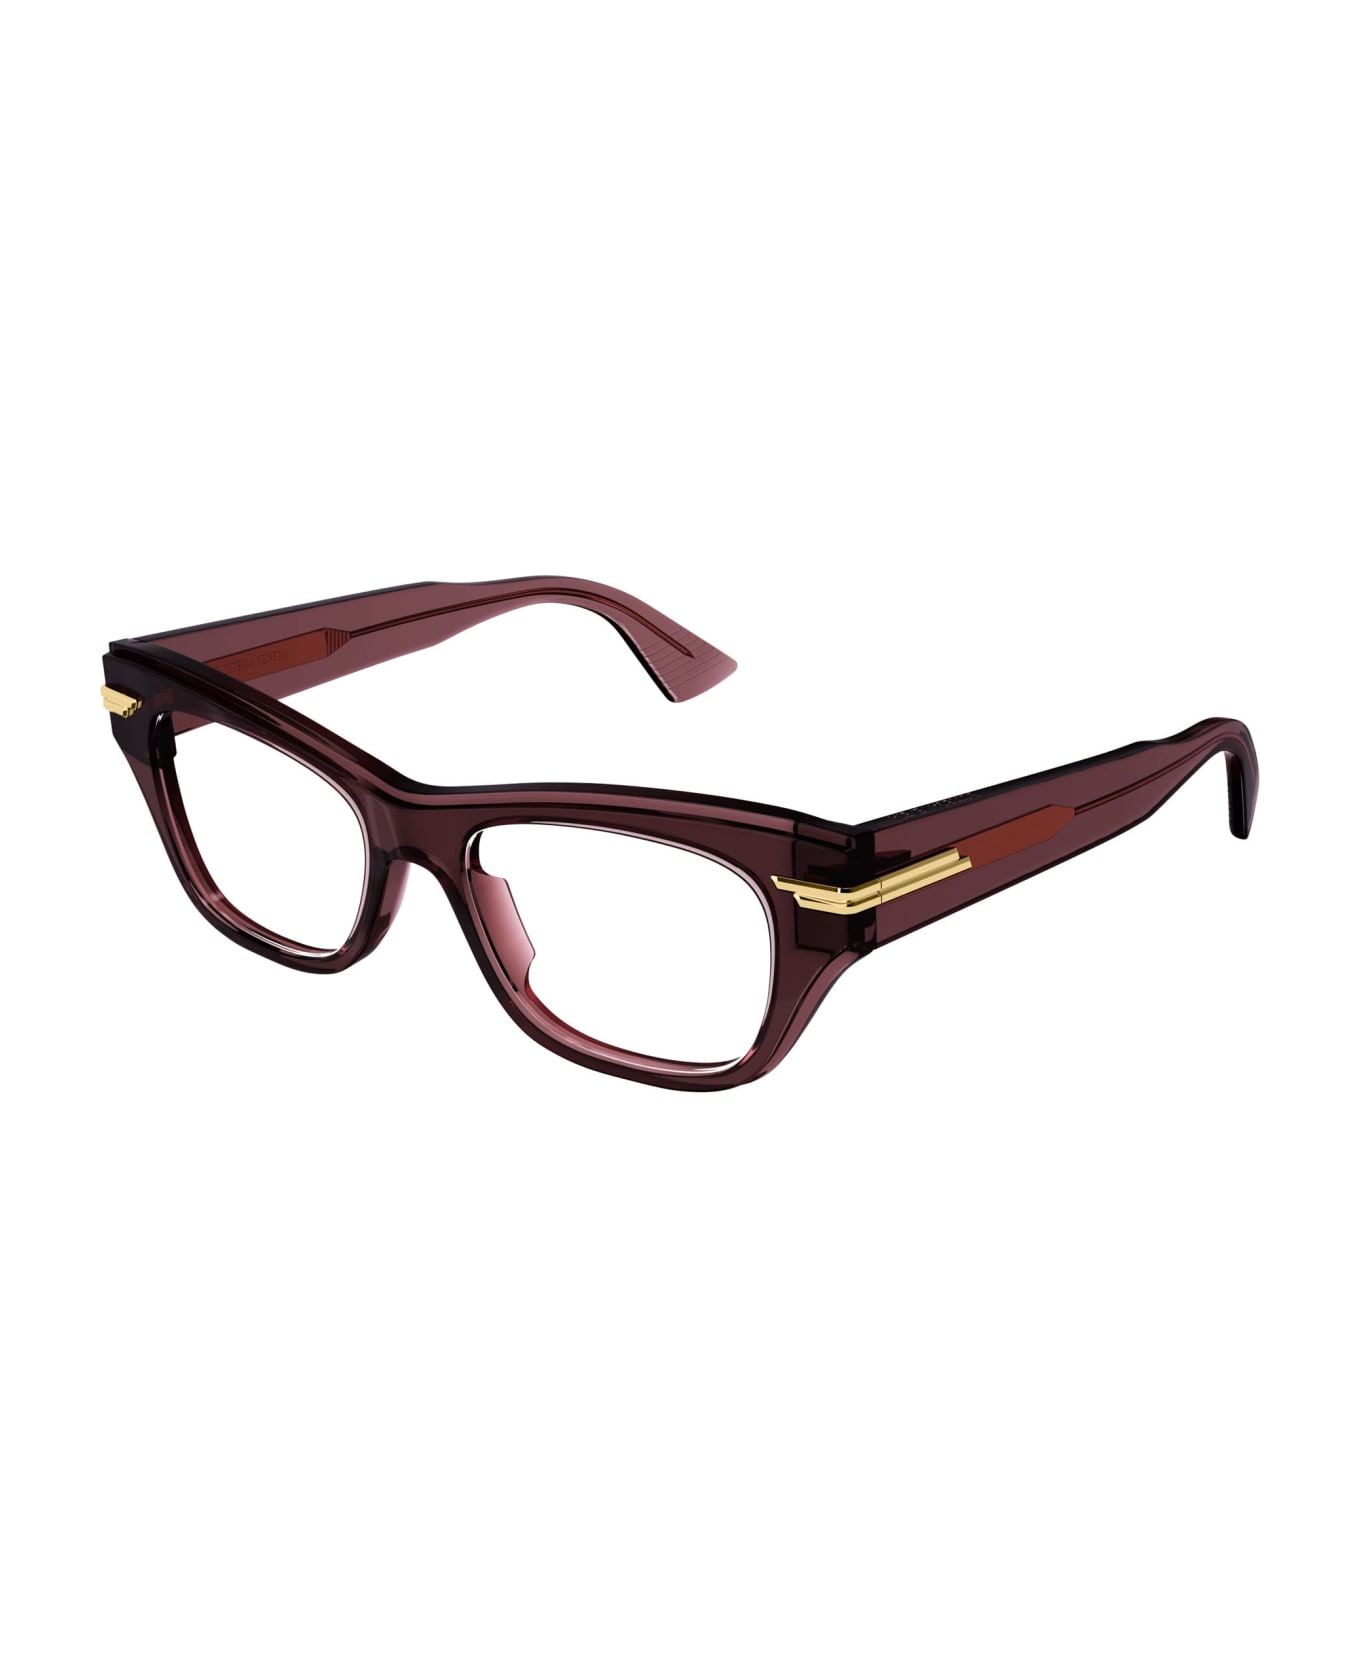 Bottega Veneta Eyewear Bv1152o-003 - Burgundy Glasses - burgundy